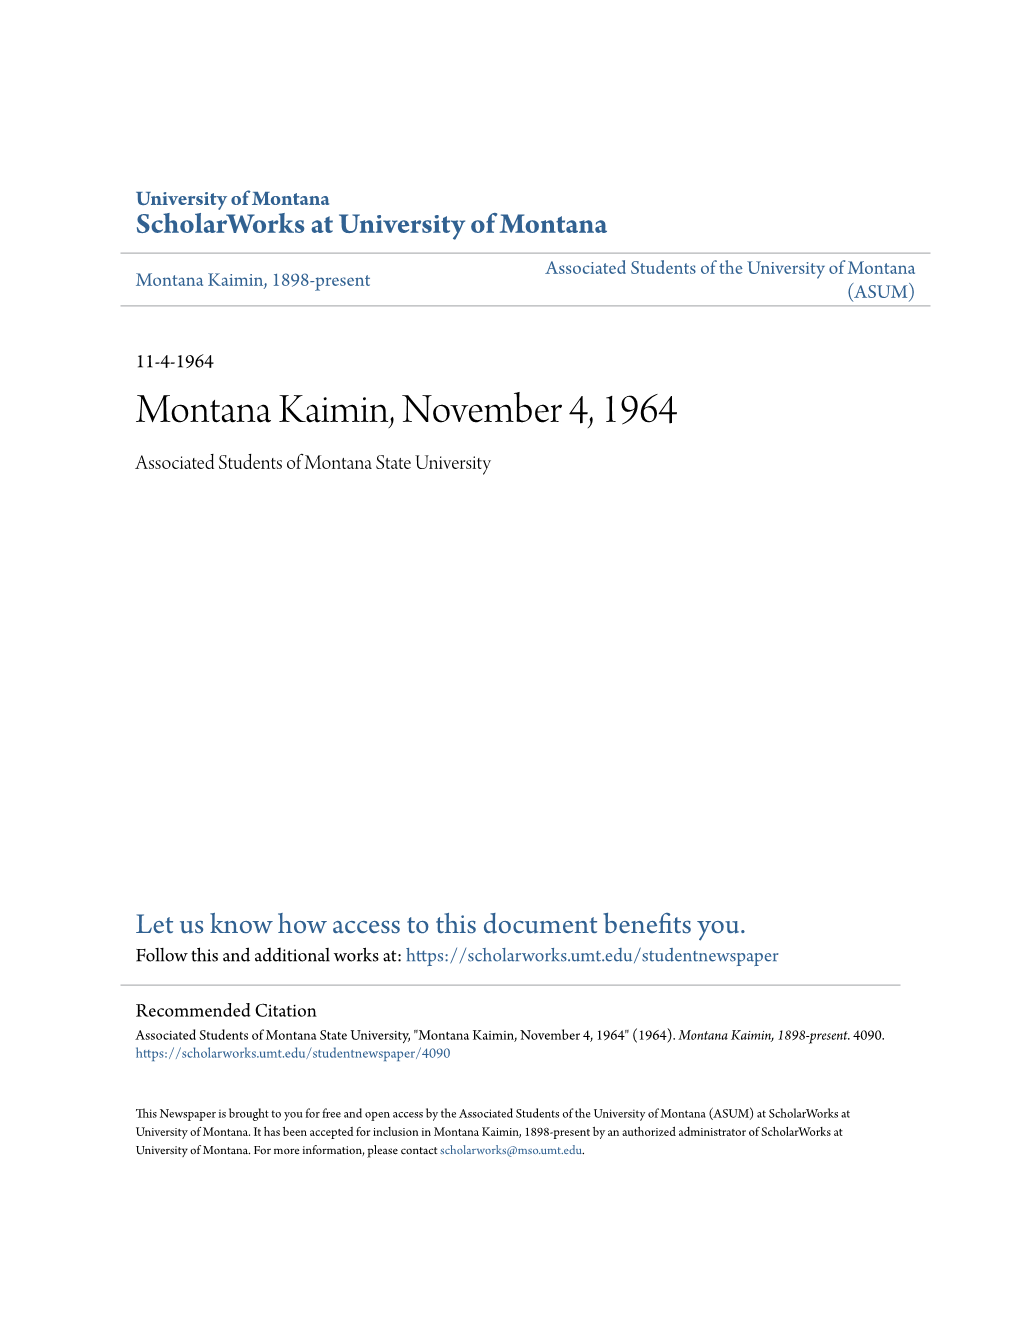 Montana Kaimin, November 4, 1964 Associated Students of Montana State University